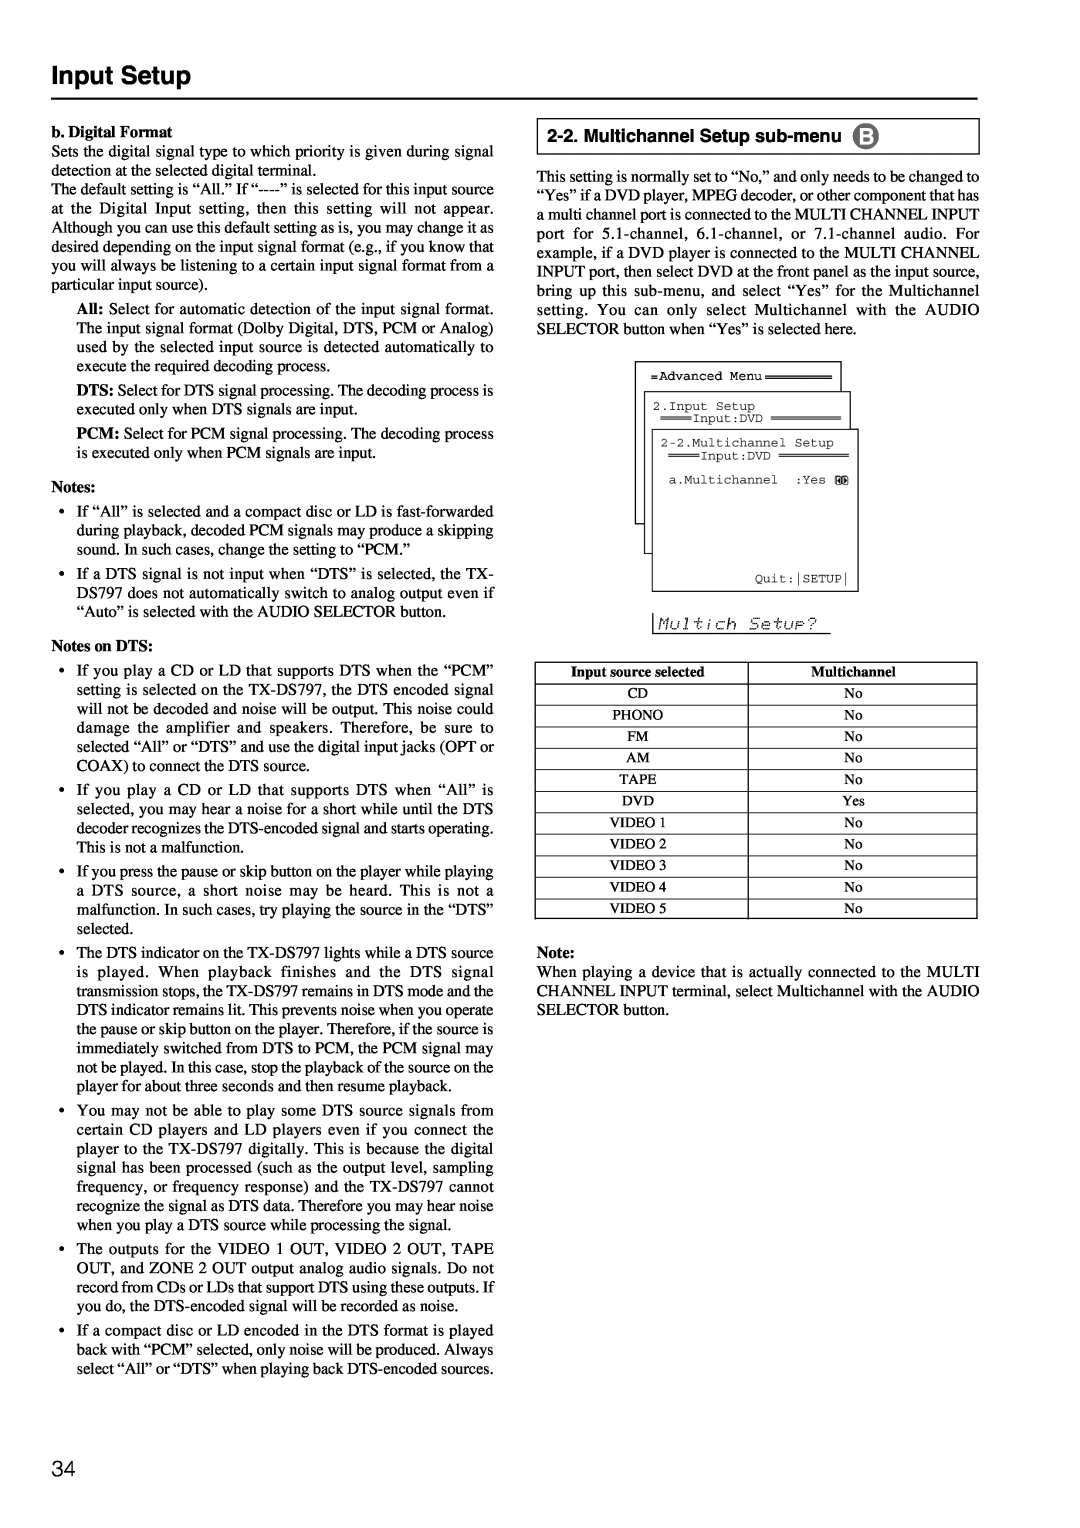 Onkyo TX-DS797 instruction manual Input Setup, Multichannel Setup sub-menu 